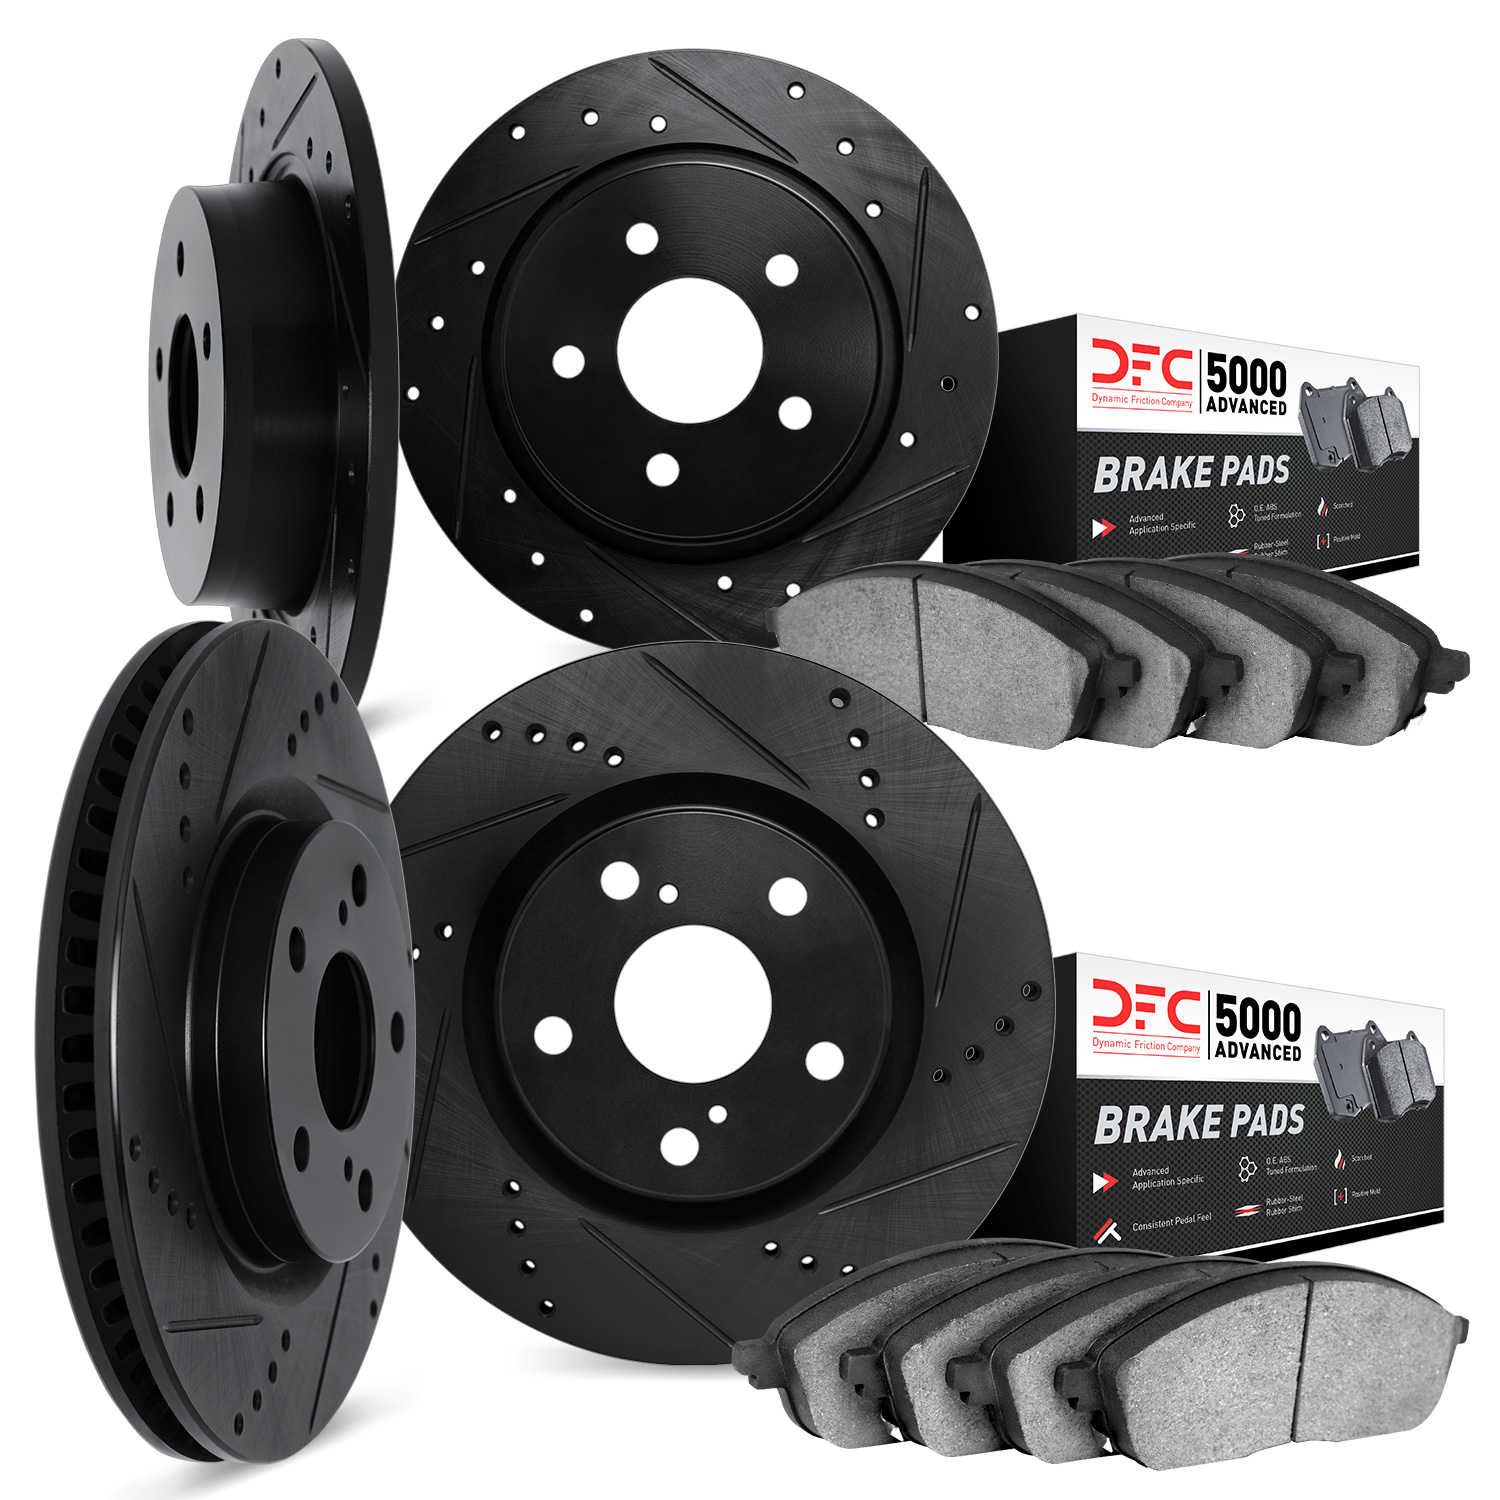 8504-40228 Drilled/Slotted Brake Rotors w/5000 Advanced Brake Pads Kit [Black], 2002-2006 Multiple Makes/Models, Position: Front